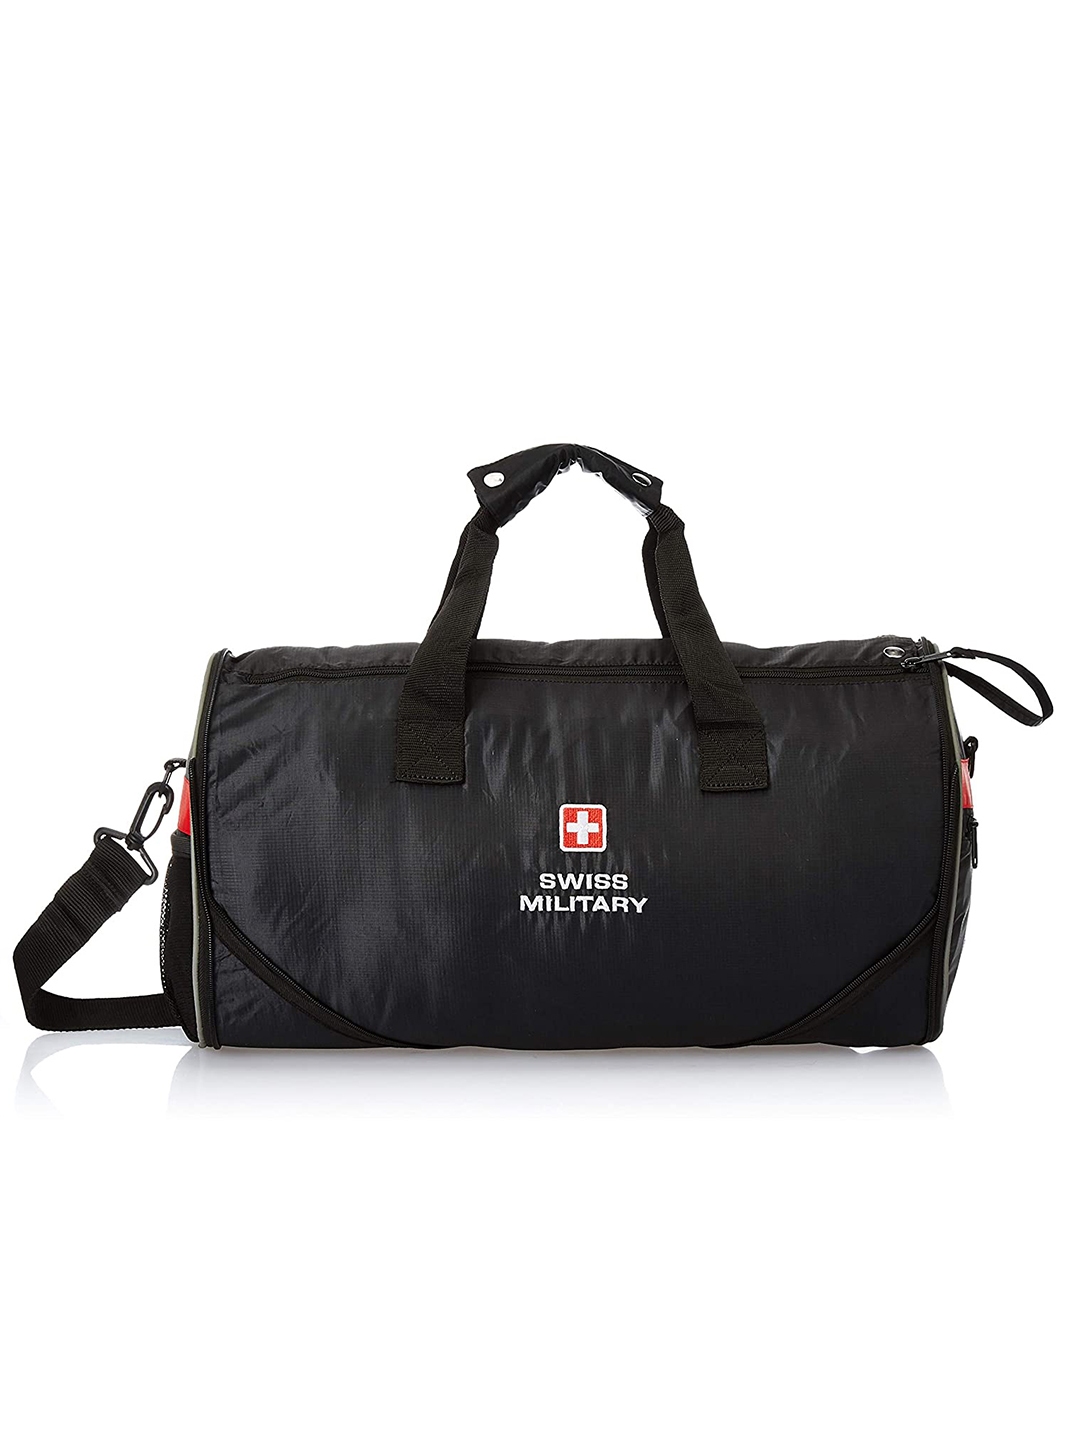 Buy SWISS MILITARY Unisex Black Foldable Duffel Bag  Duffel Bag for Unisex  1070876  Myntra